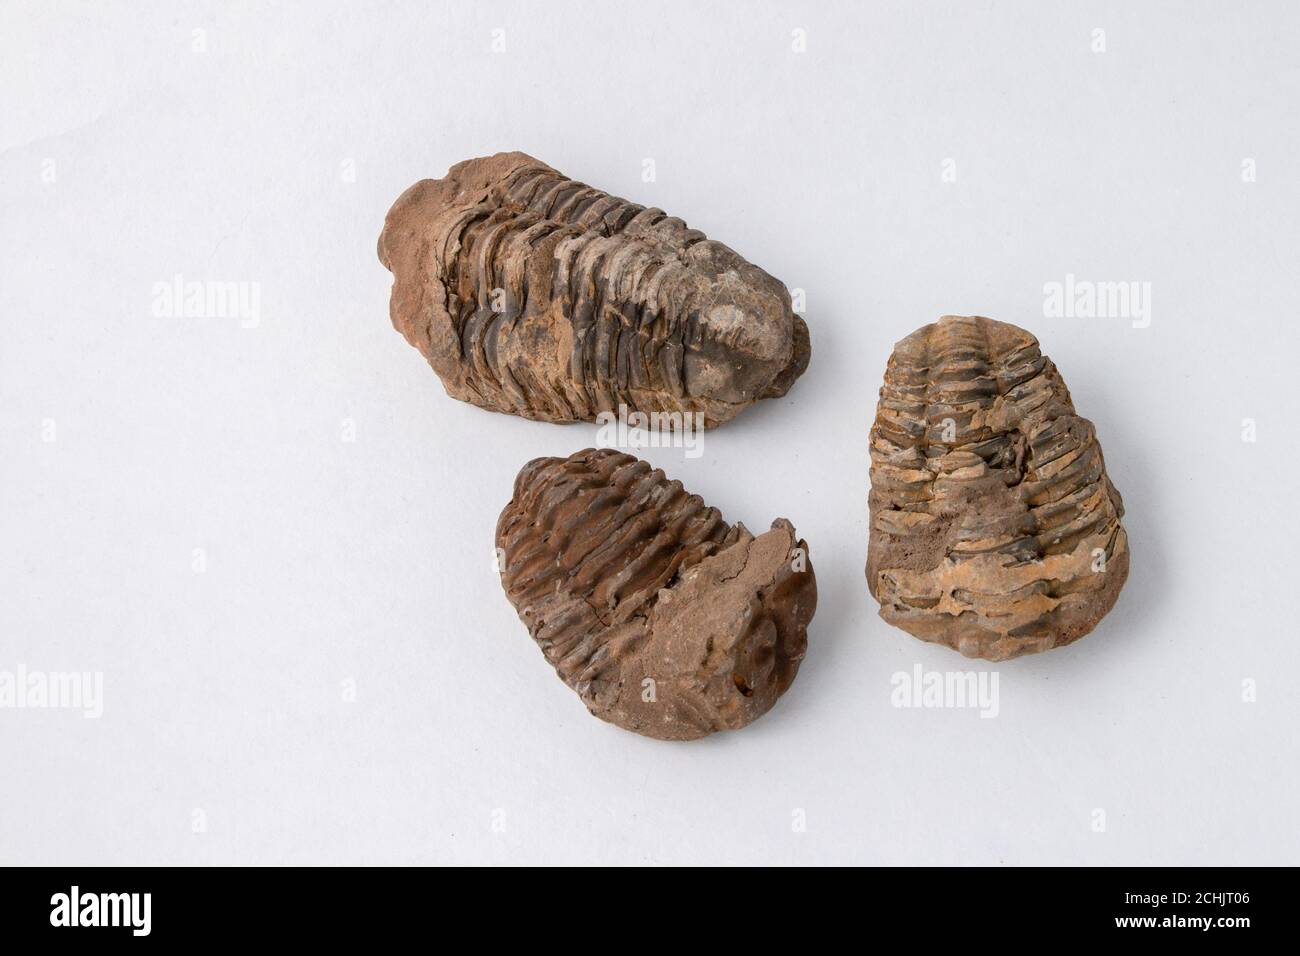 3 Trilobite Fossil specimens on white background Stock Photo